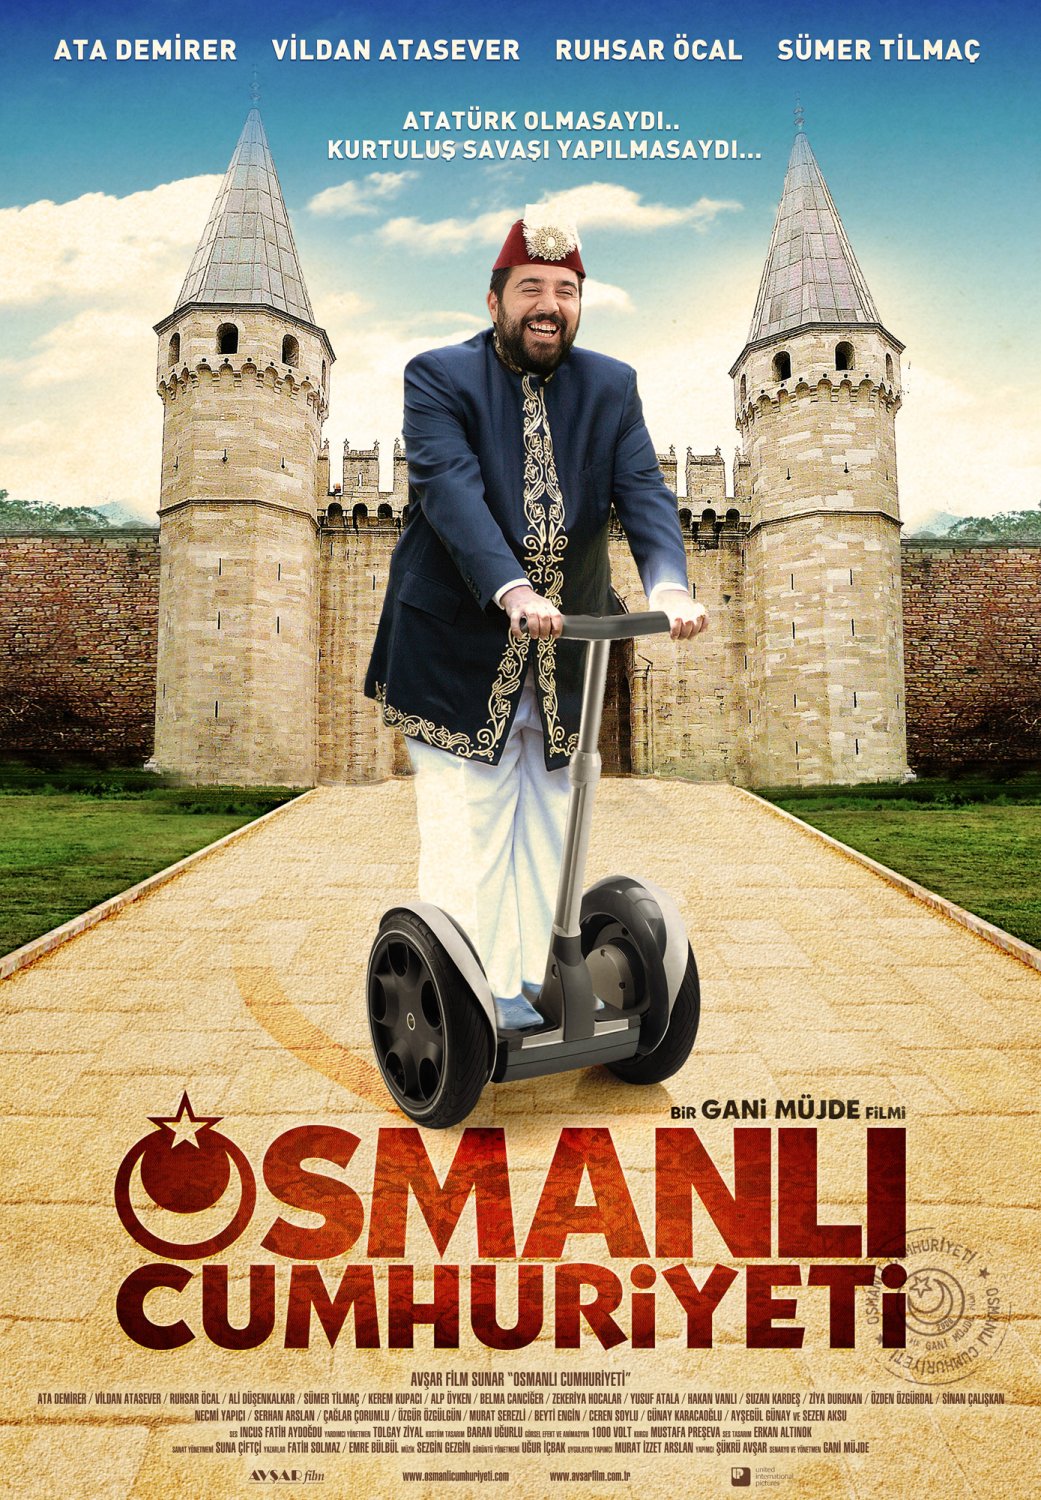 Extra Large Movie Poster Image for Osmanli Cumhuriyeti 